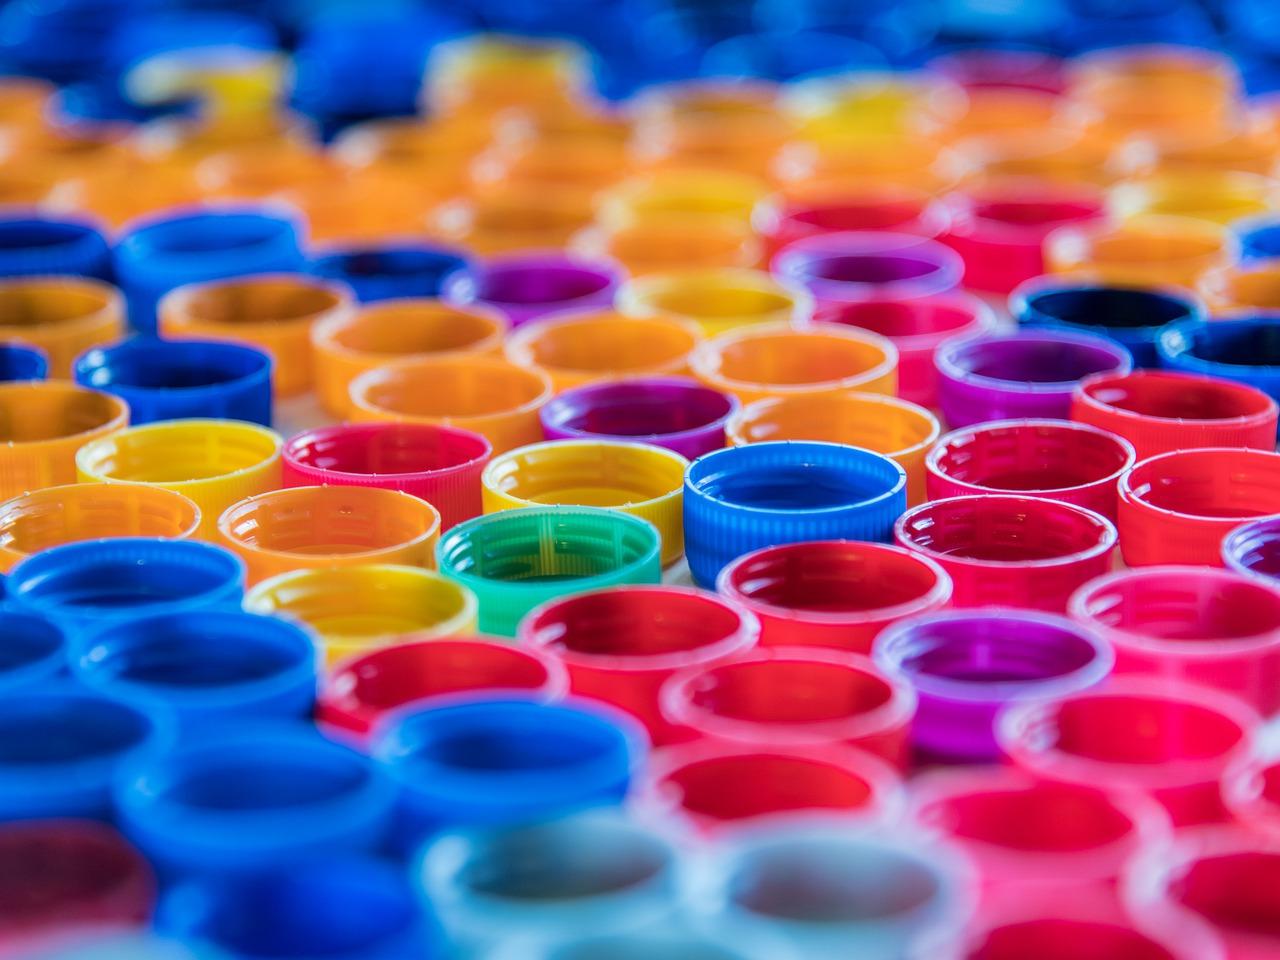 Picture of numerous plastic bottle caps courtesy of Pixa Bay